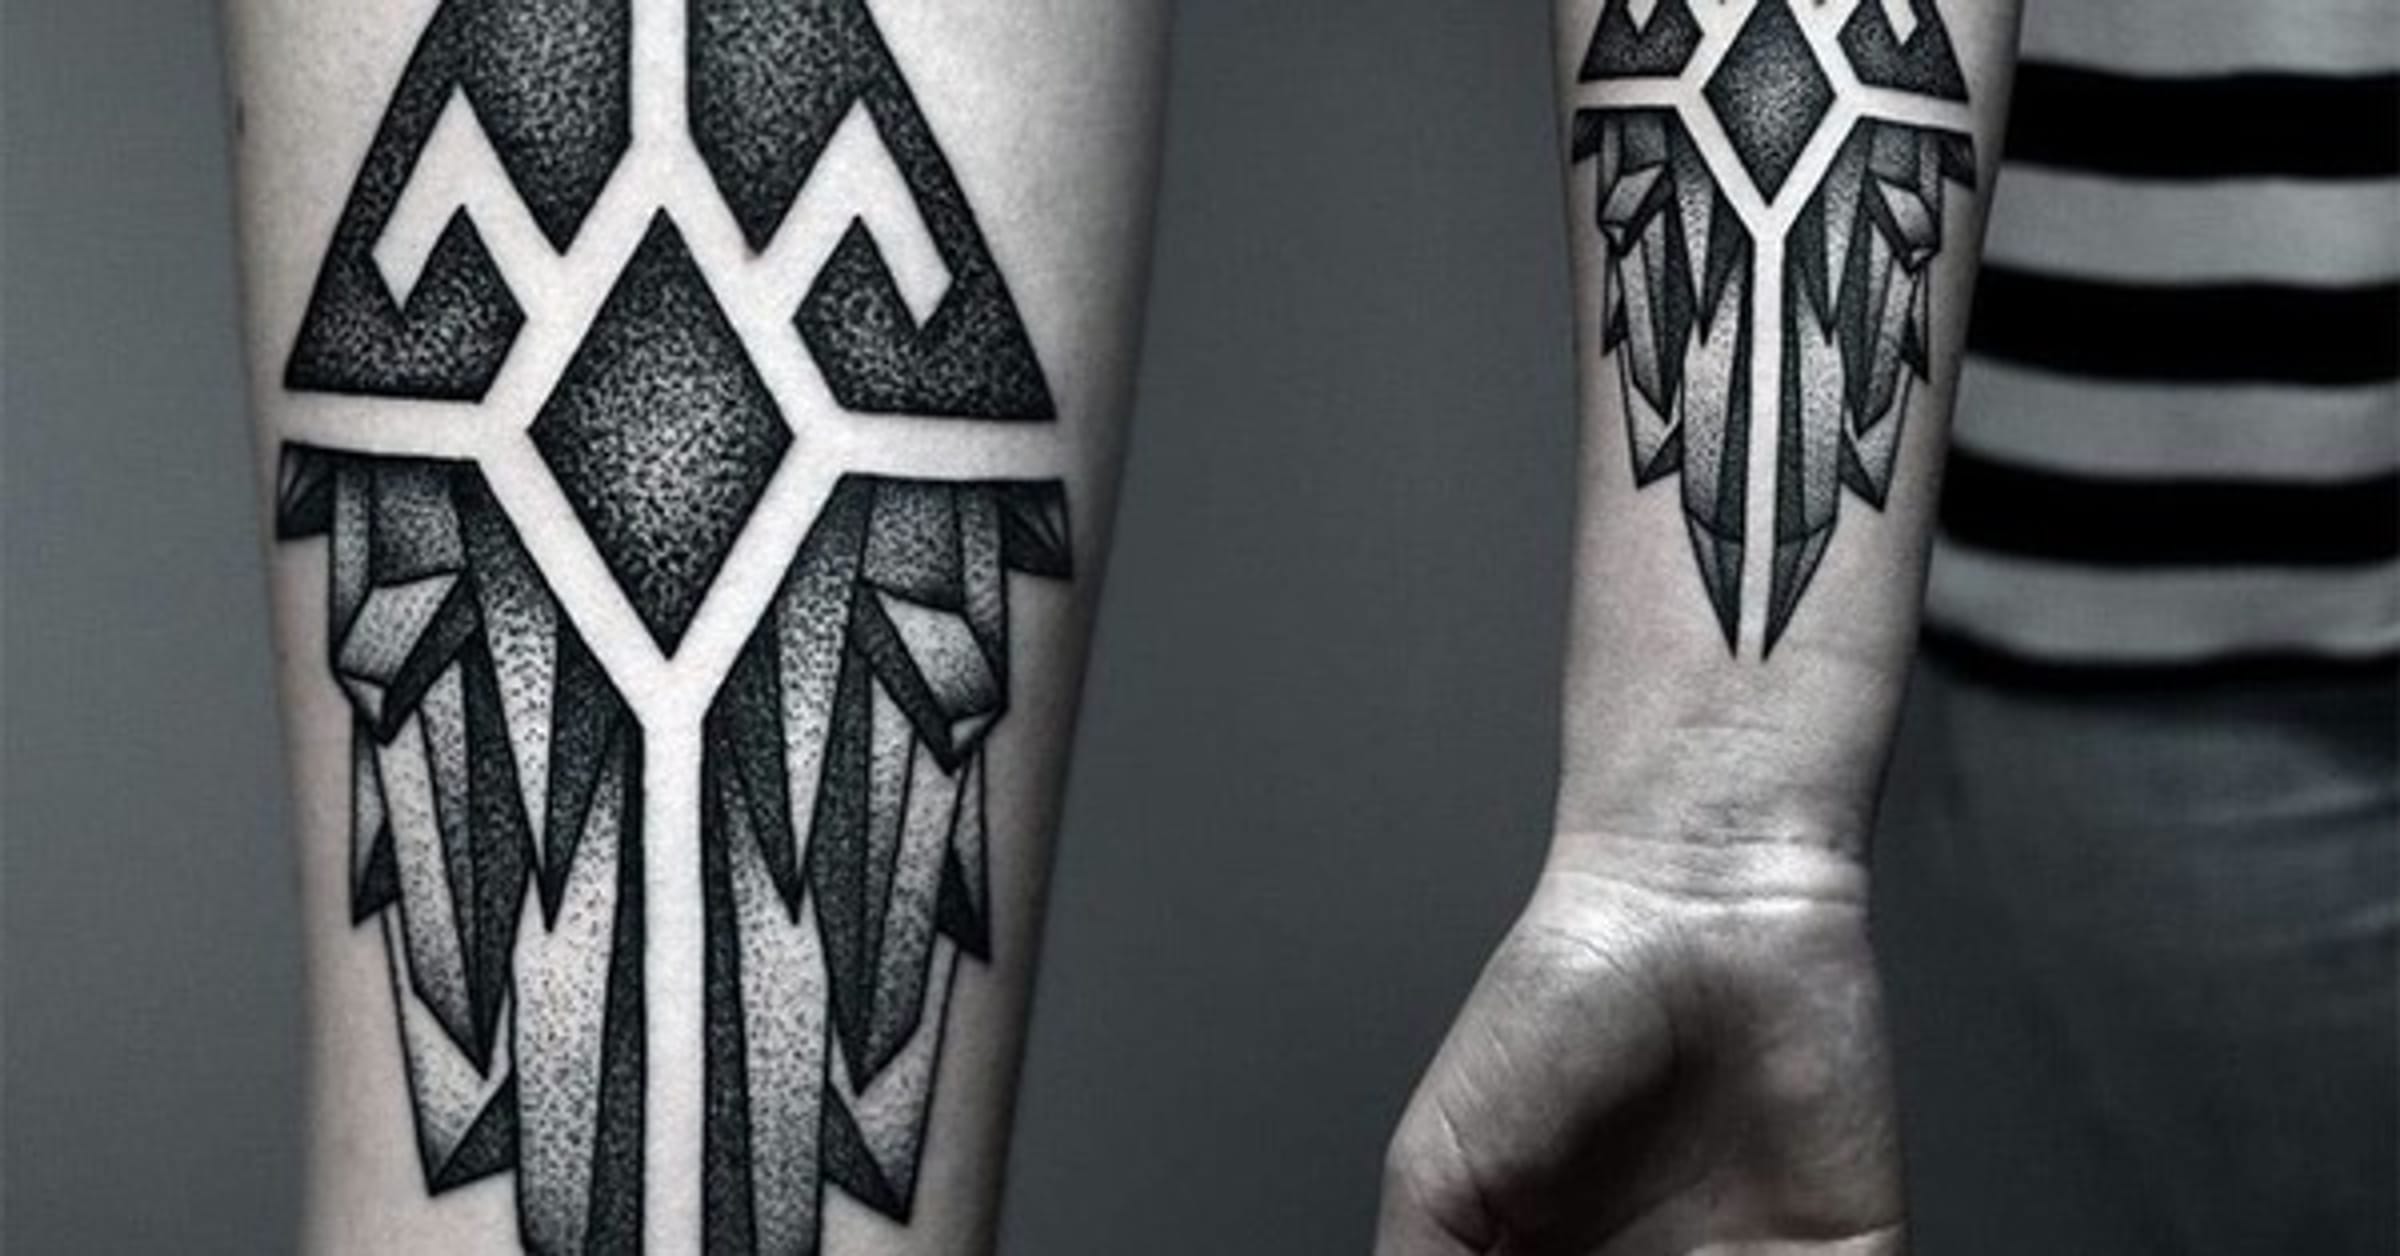 tattoos designs for men on wrist